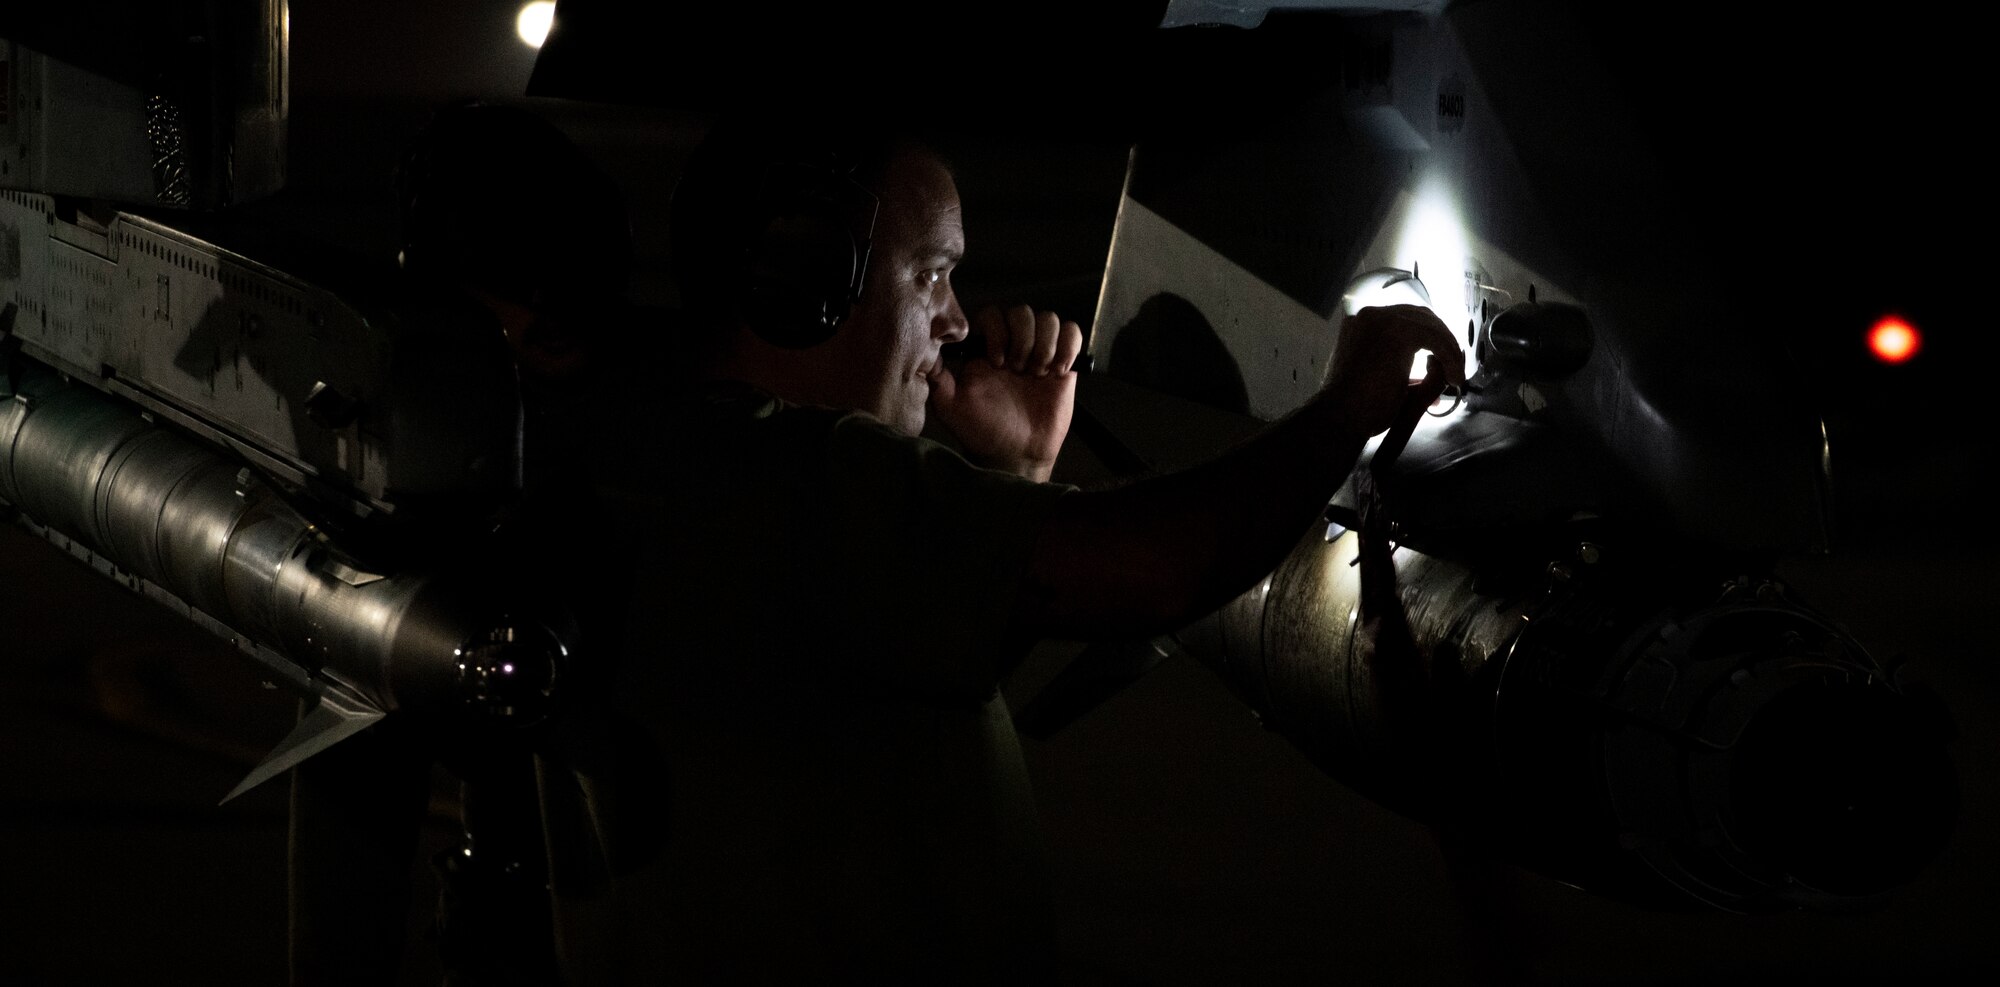 Military member looks at aircraft under a flashlight at night.